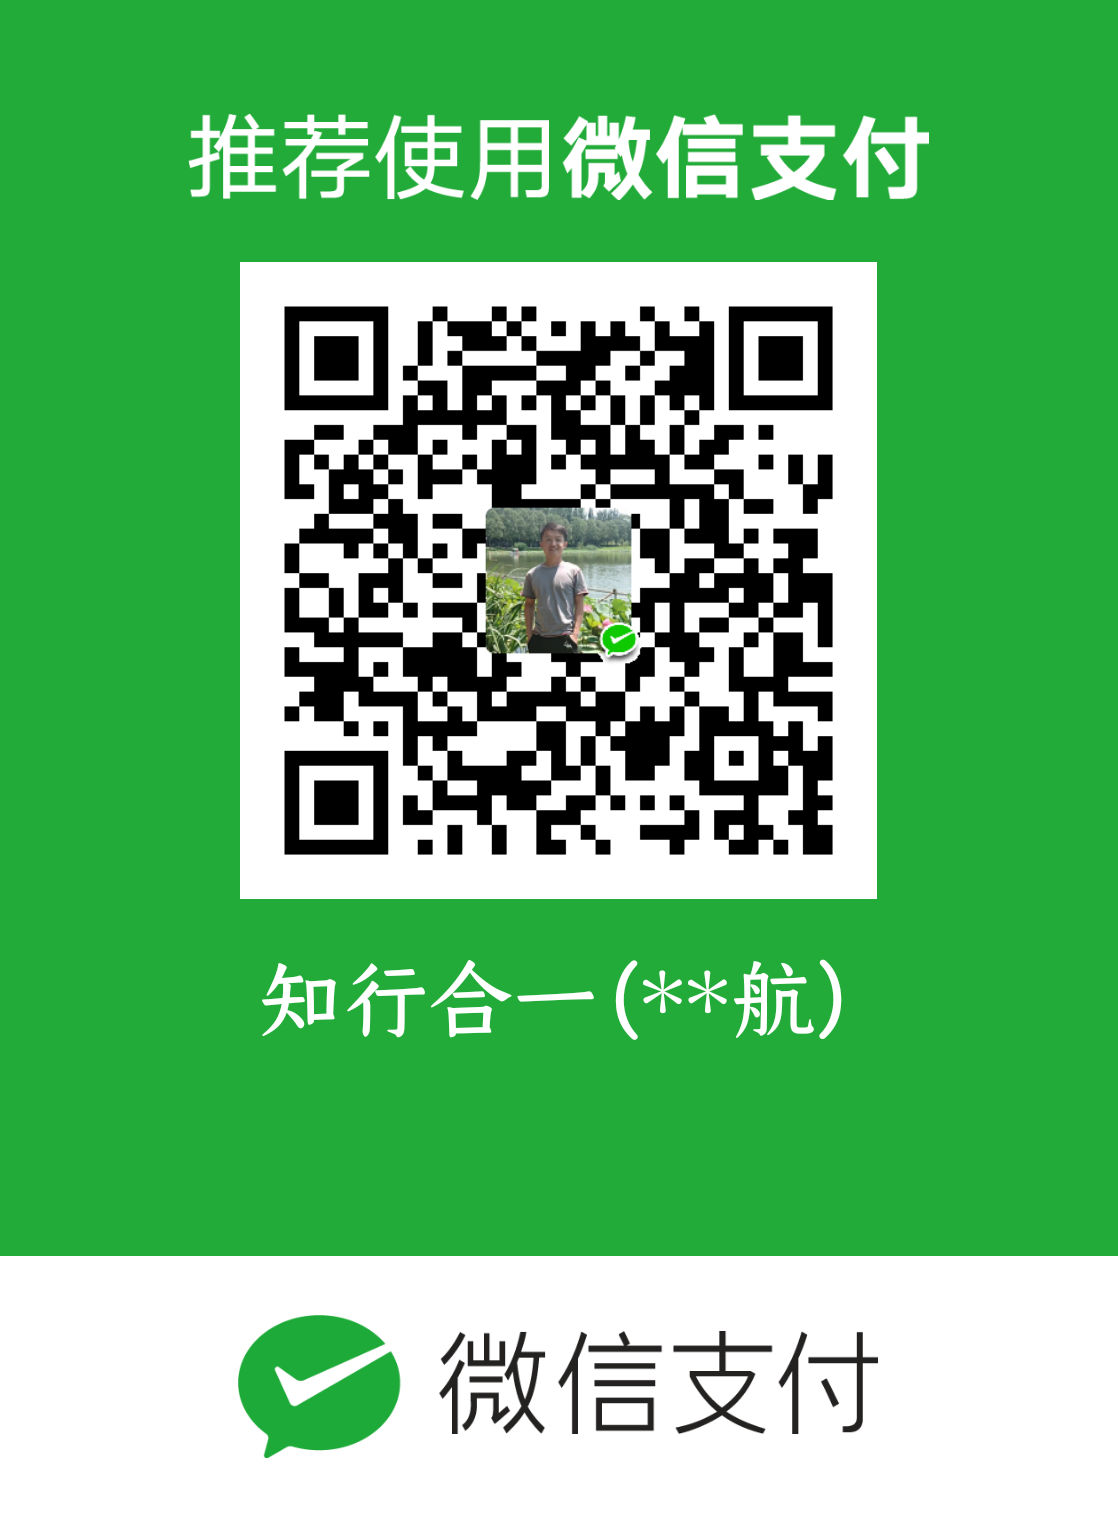 李航航 WeChat Pay